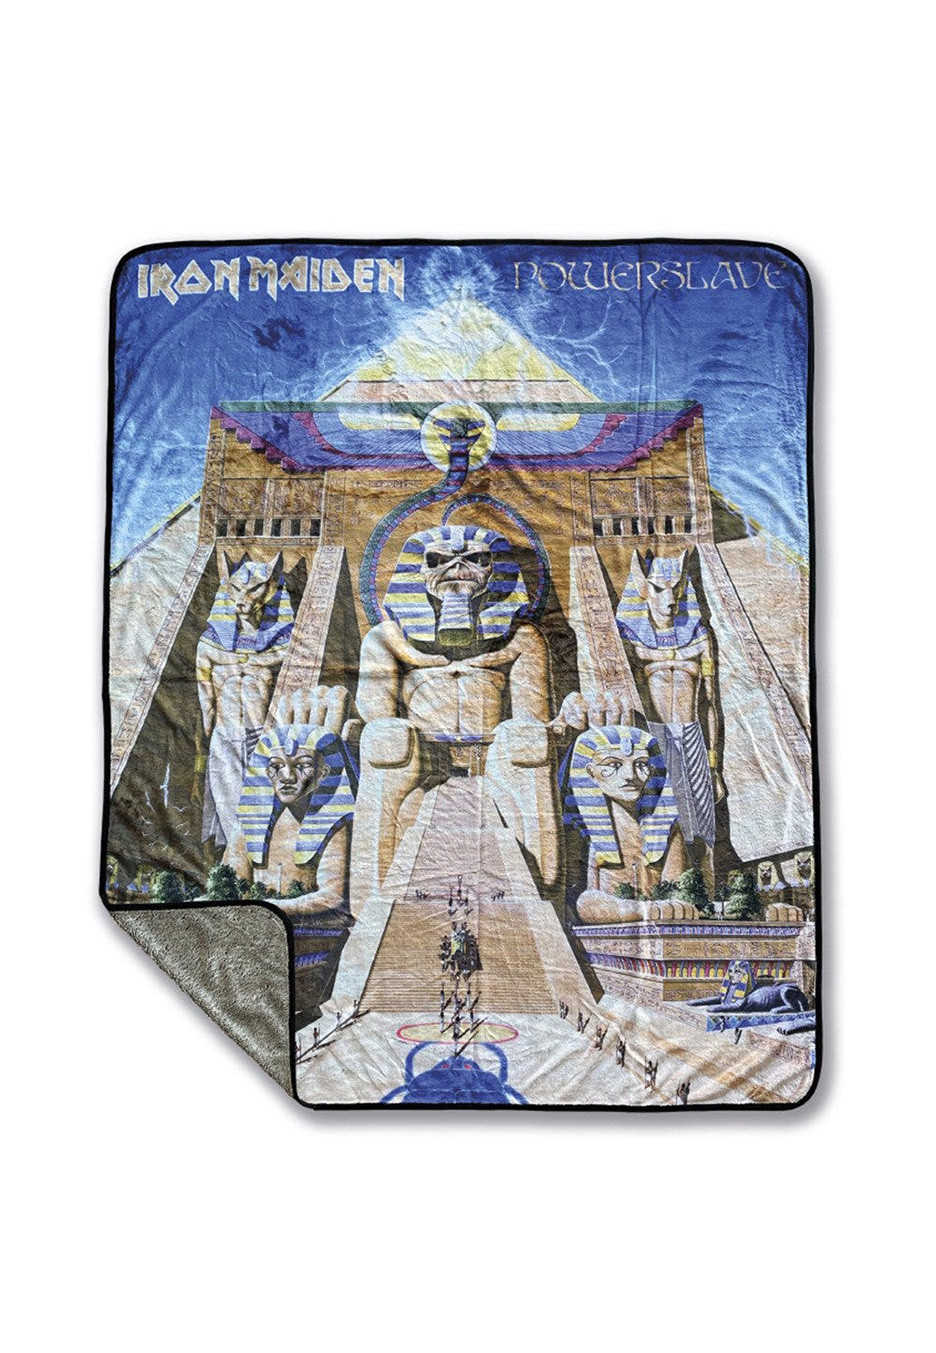 Iron Maiden - Powerslave - Blanket